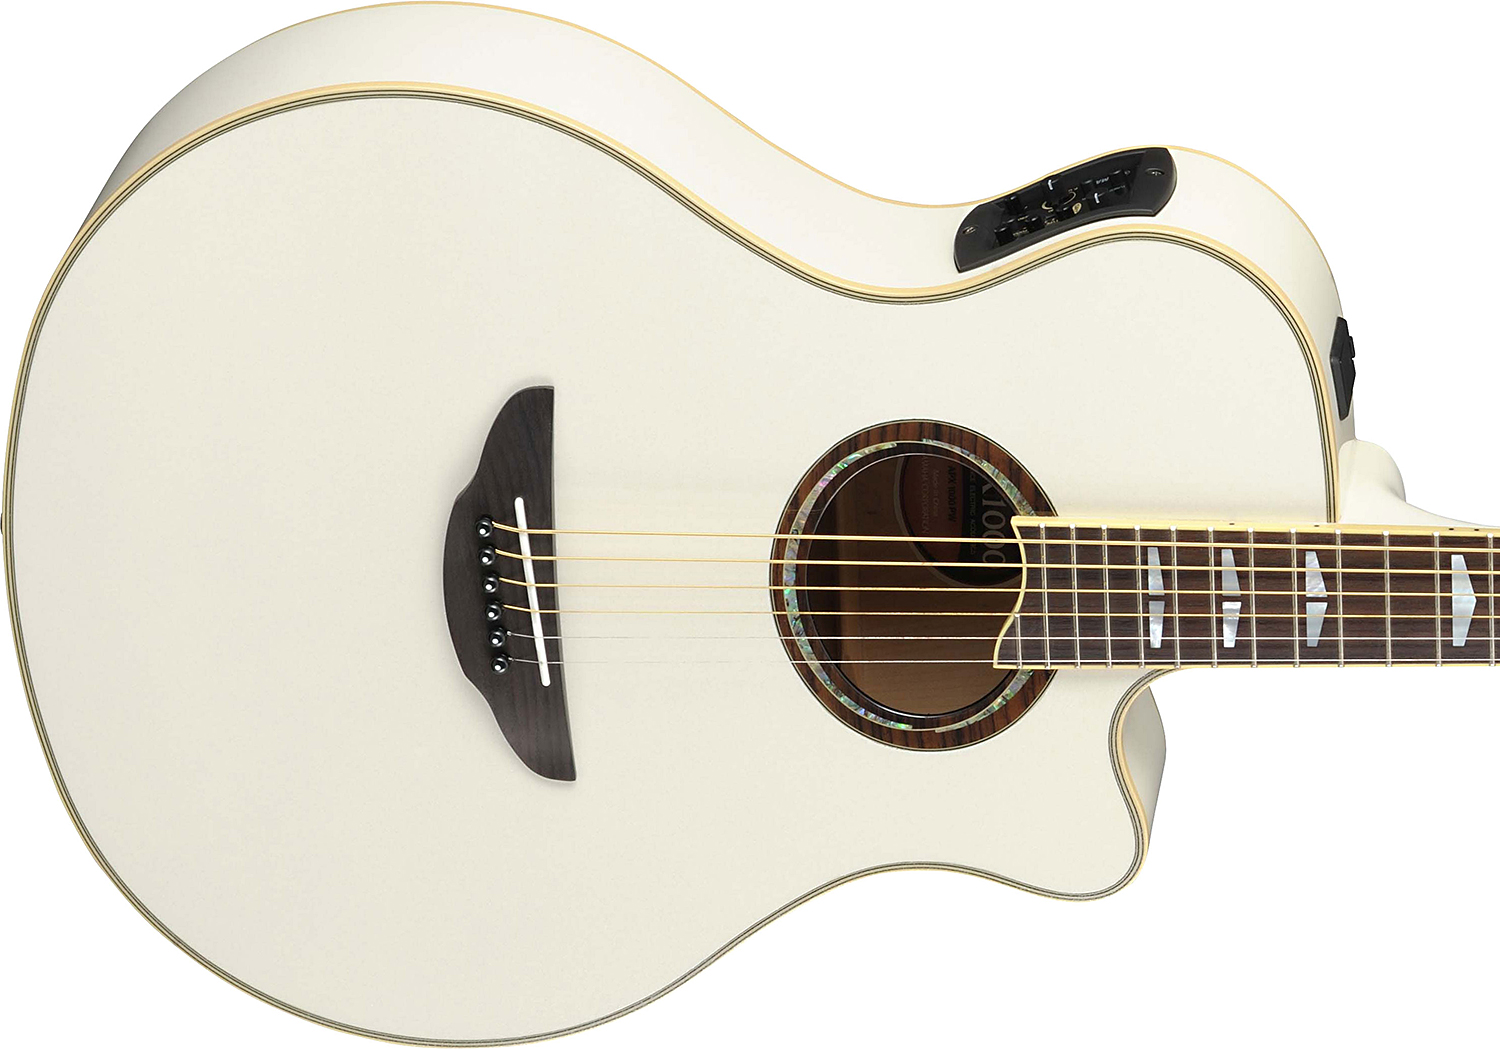 Yamaha Apx1000 Pearl White - Pearl White - Elektroakustische Gitarre - Variation 2